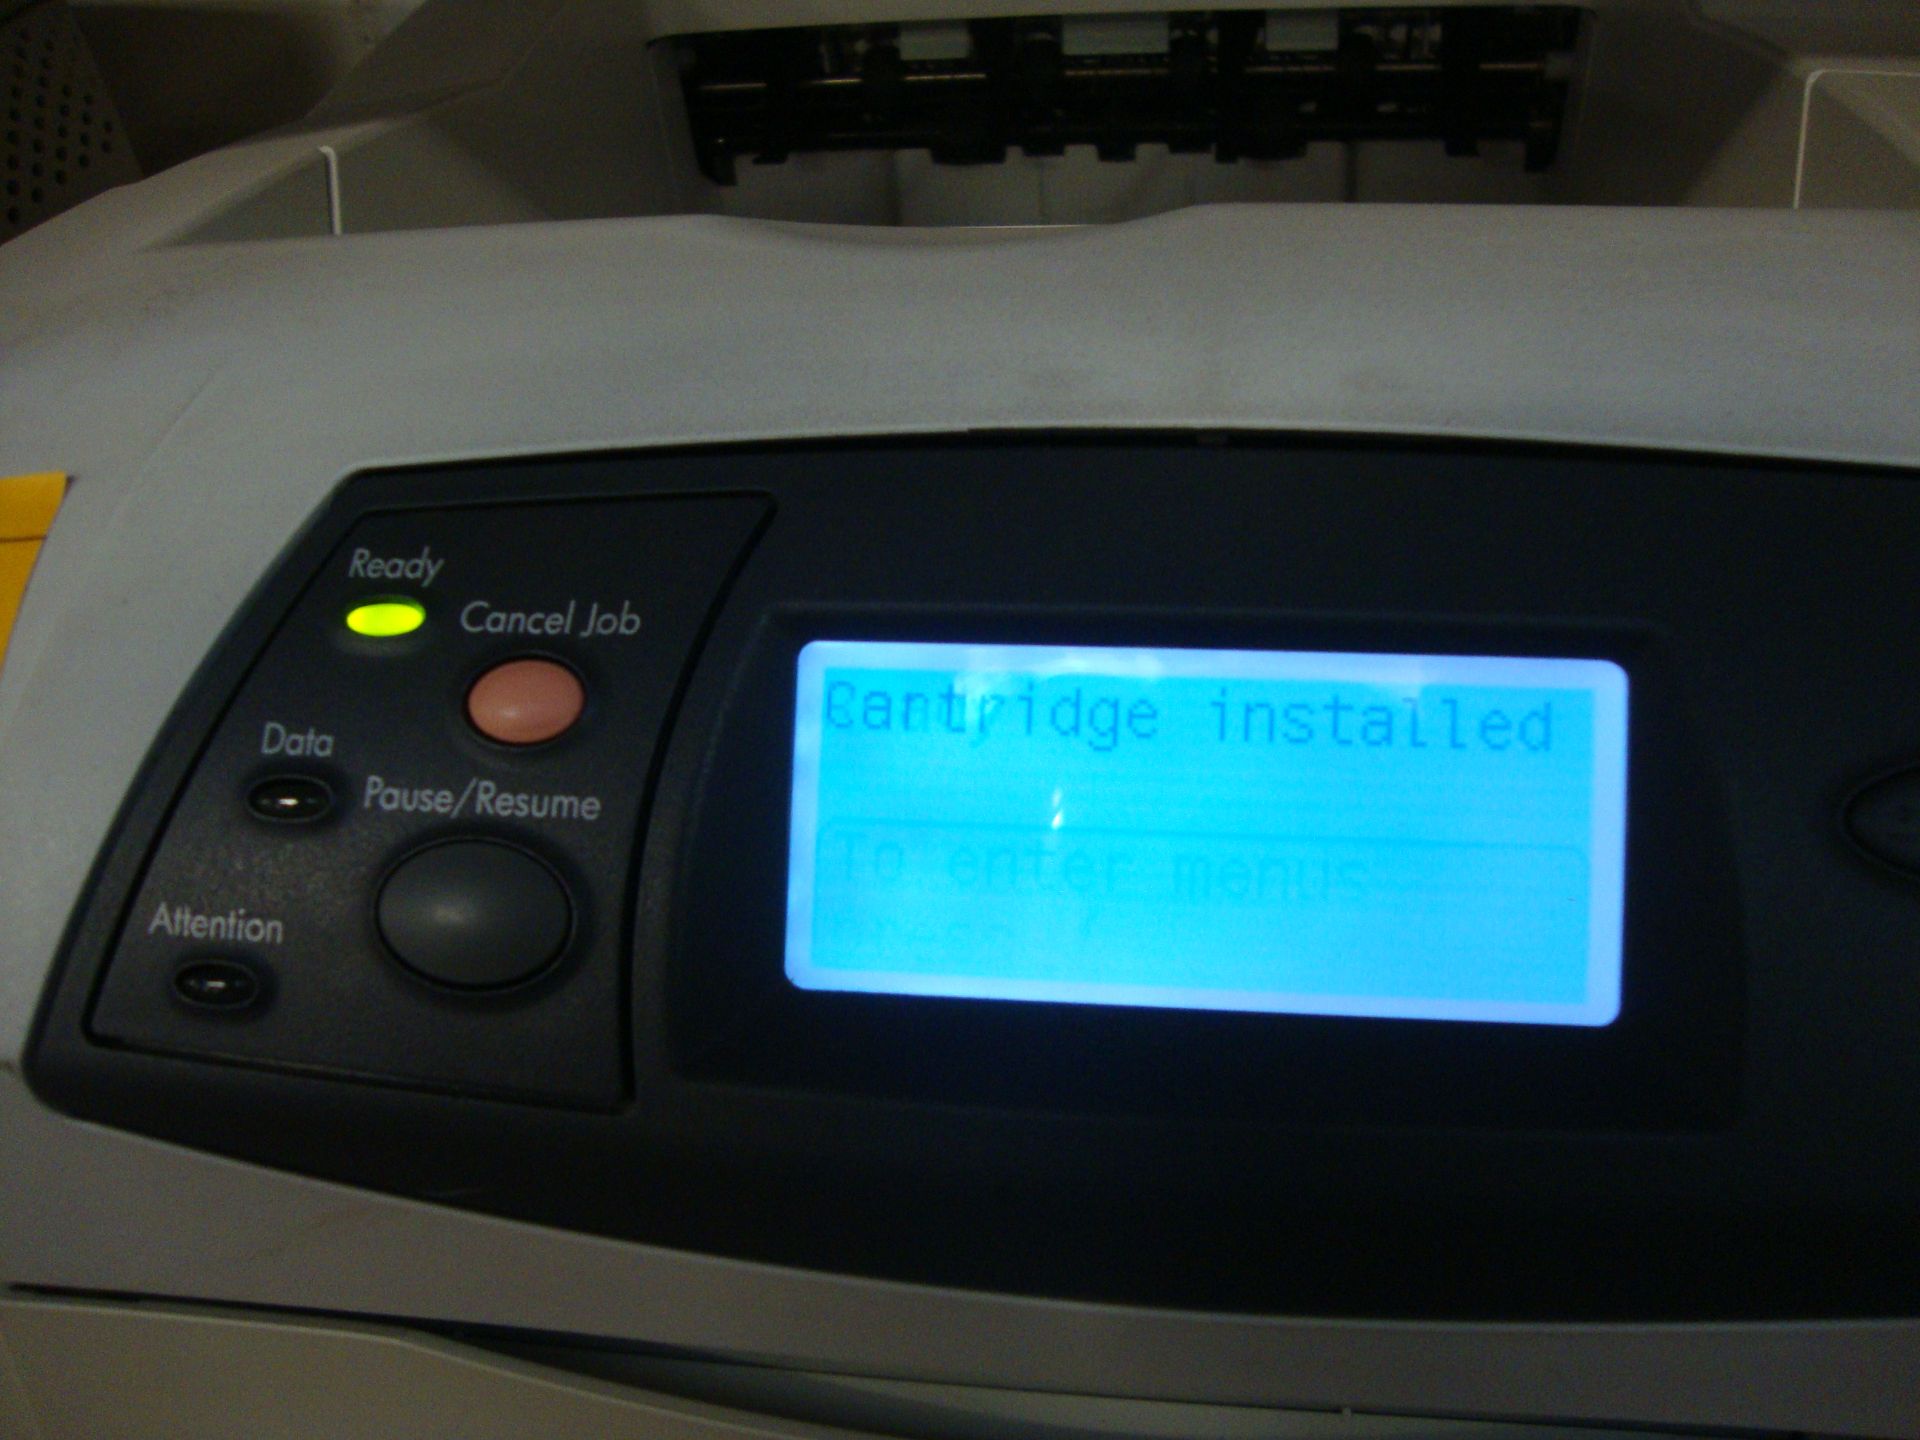 HP LaserJet 4200N - Image 5 of 6